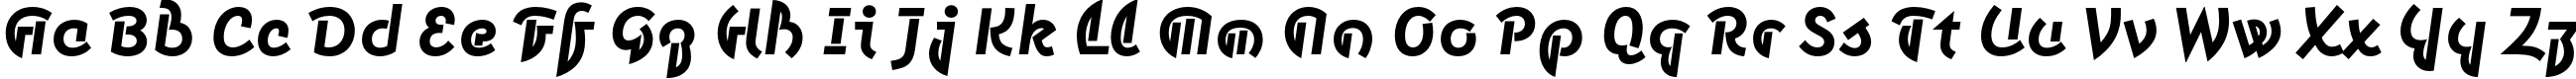 Пример написания английского алфавита шрифтом Smena Bold